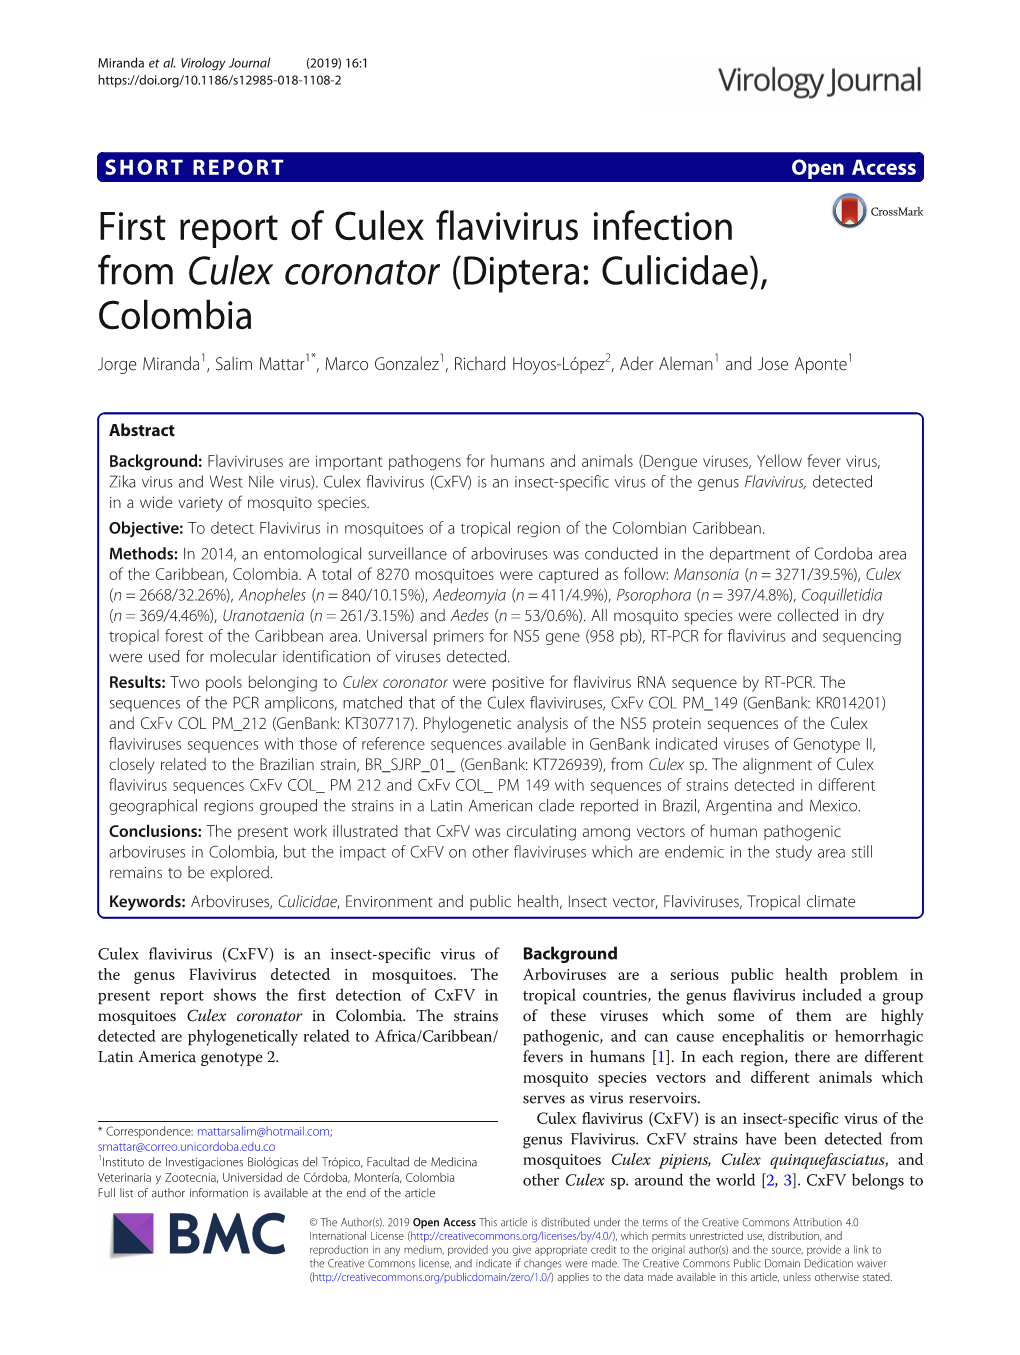 First Report of Culex Flavivirus Infection from Culex Coronator